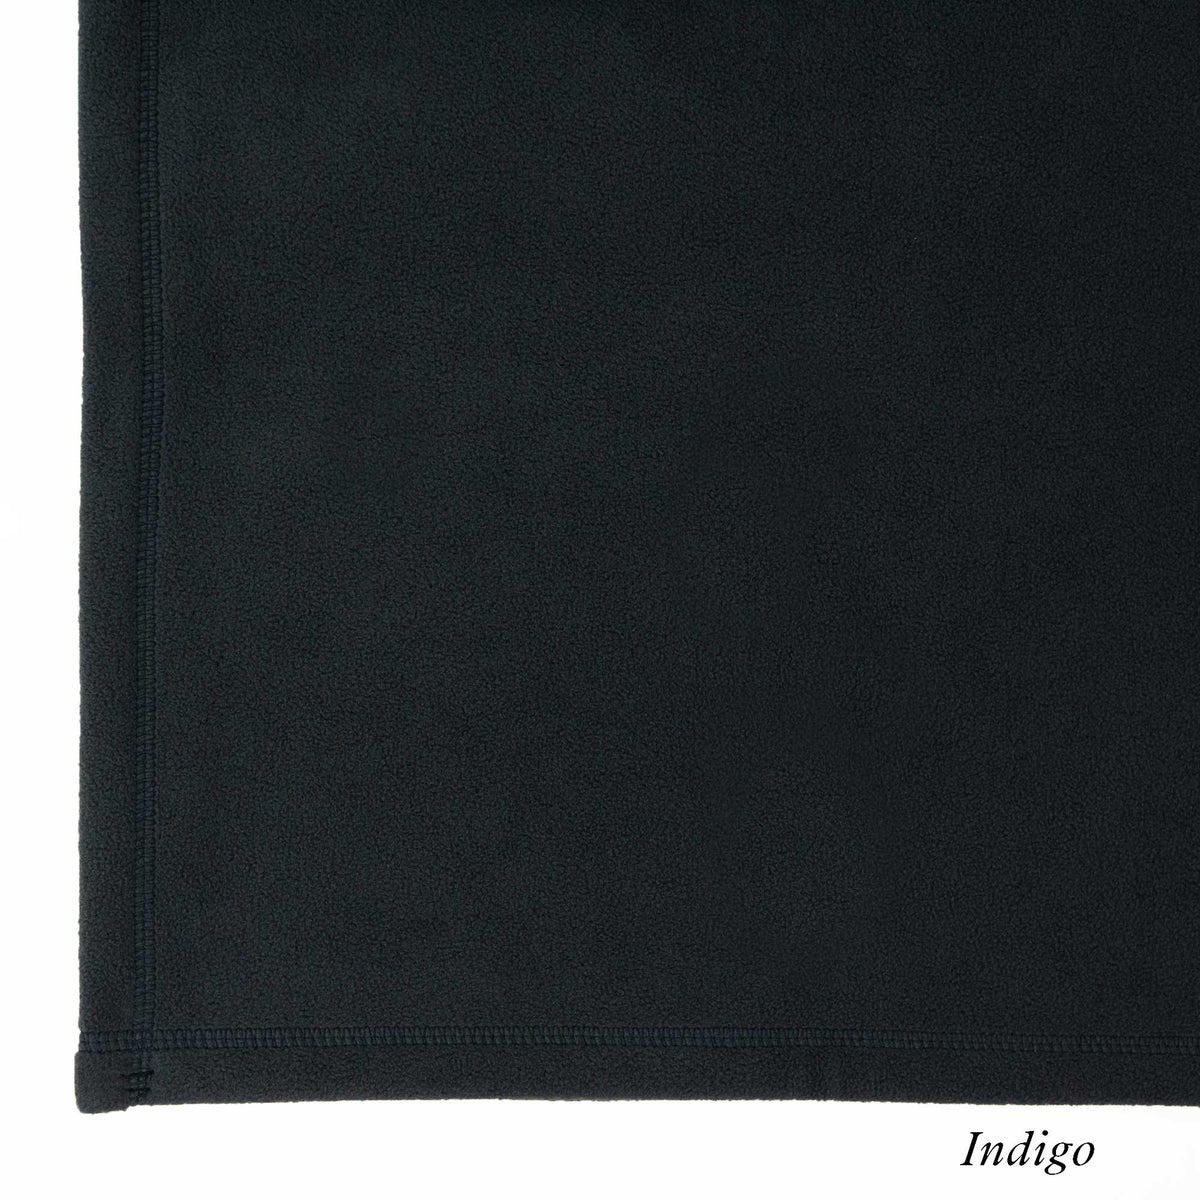 Indigo - Peaceful Touch - The Best Fleece Blankets - Custom Size Peaceful Touch Fleece Blankets - American Blanket Company